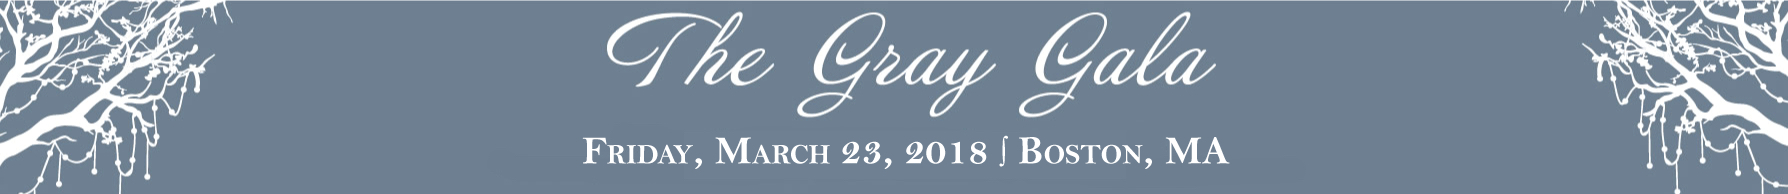 The Gray Gala